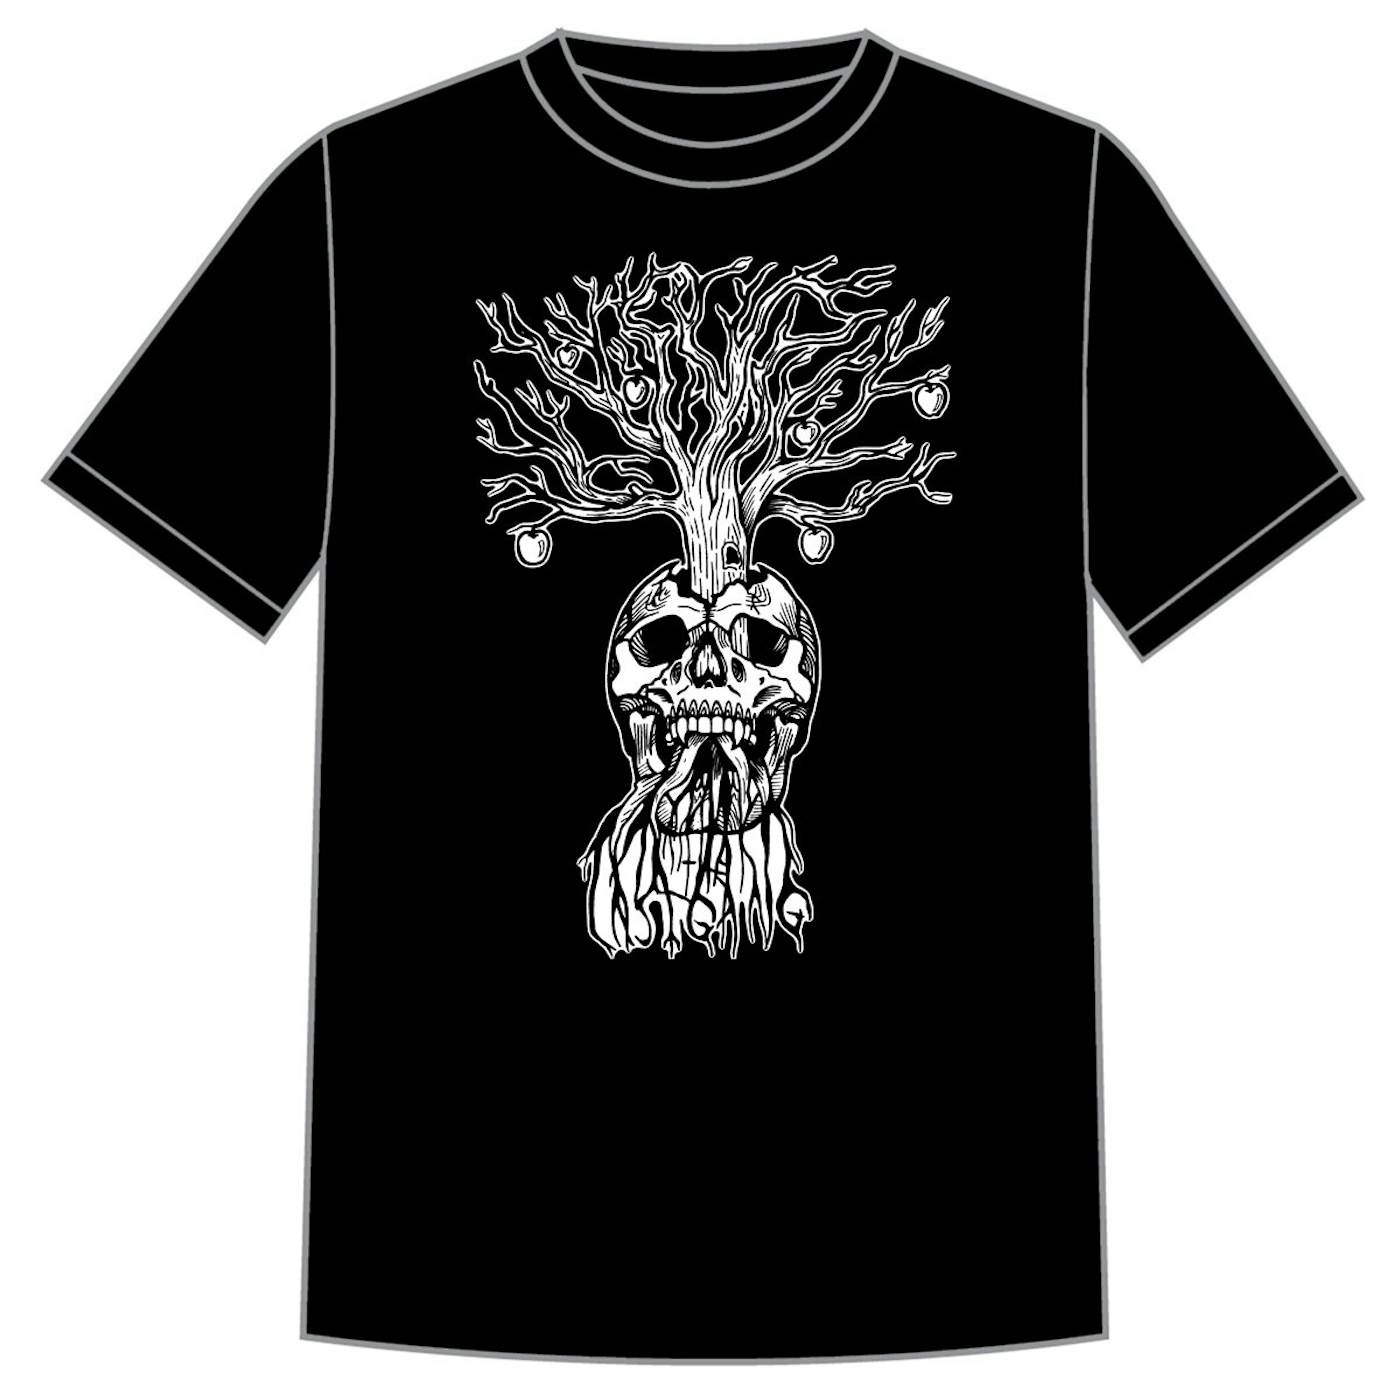 The Last Gang "Tree Shirt"